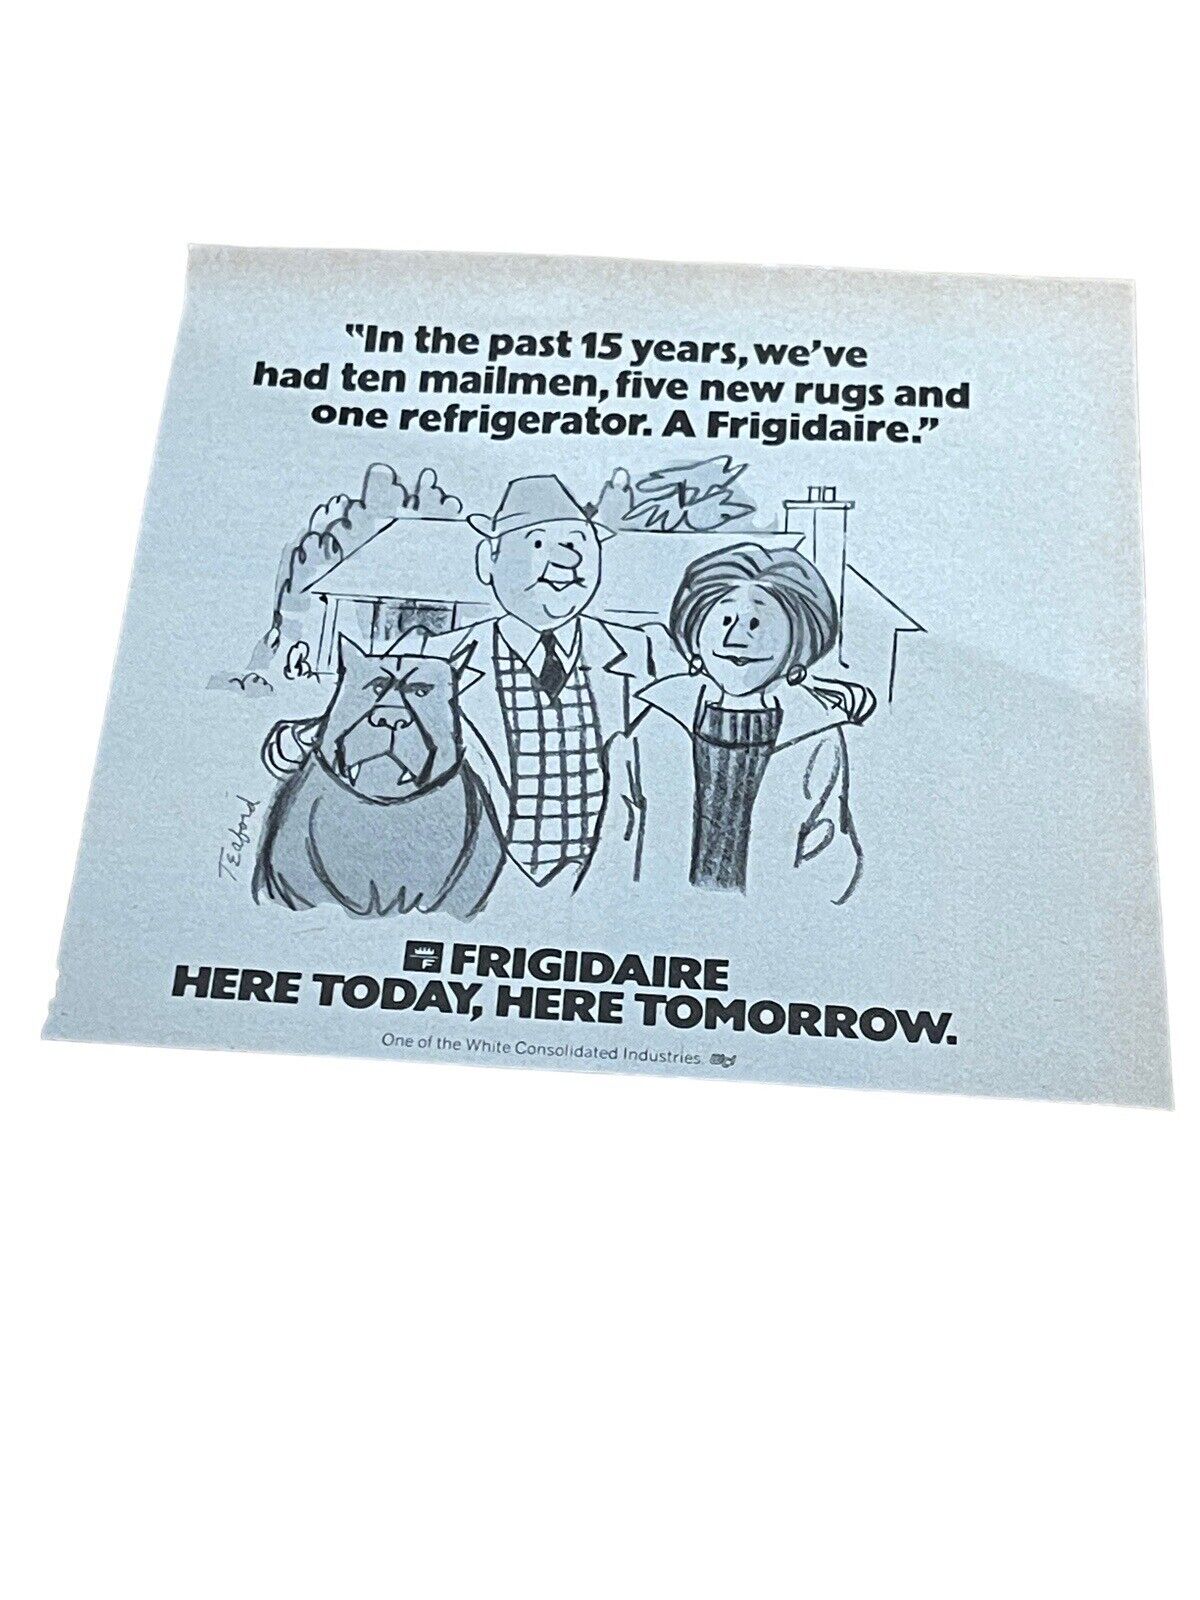 1981 Frigidaire: Ten Mailmen, Five New Rugs, One Refri Vintage Print Ad 5x5